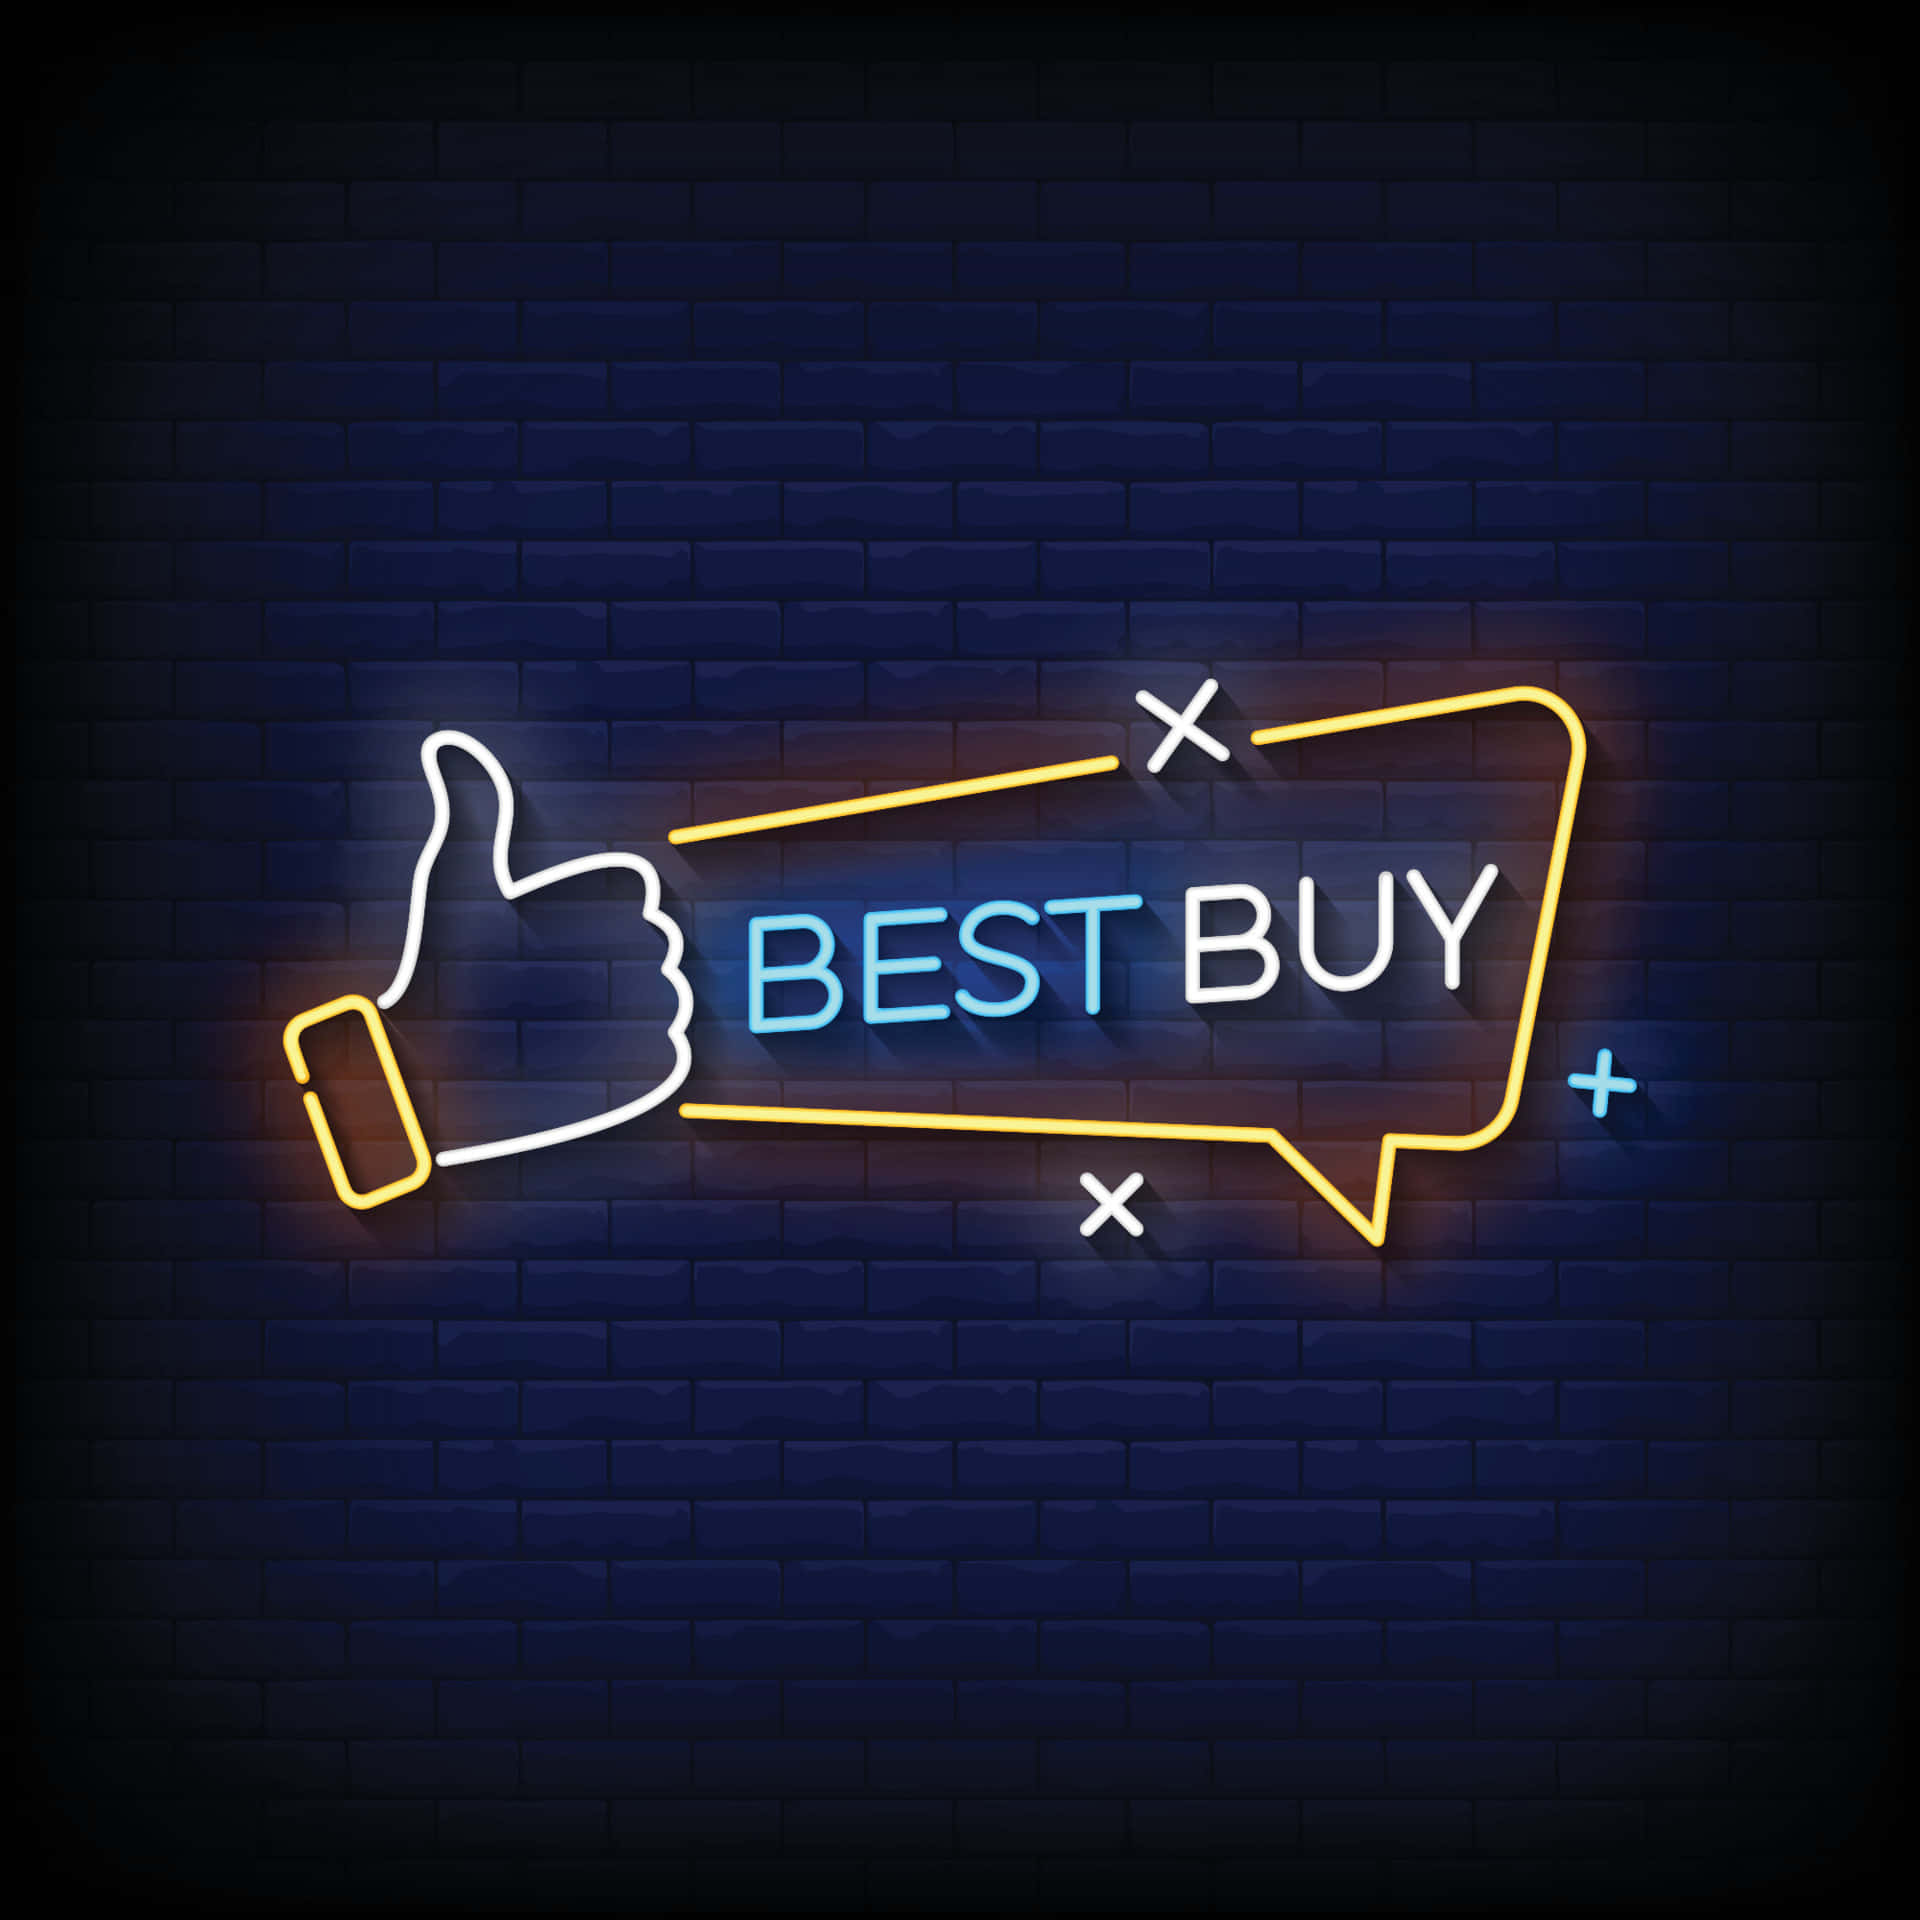 Caption: Impeccable Showcase Of Best Buy's Premium Electronics